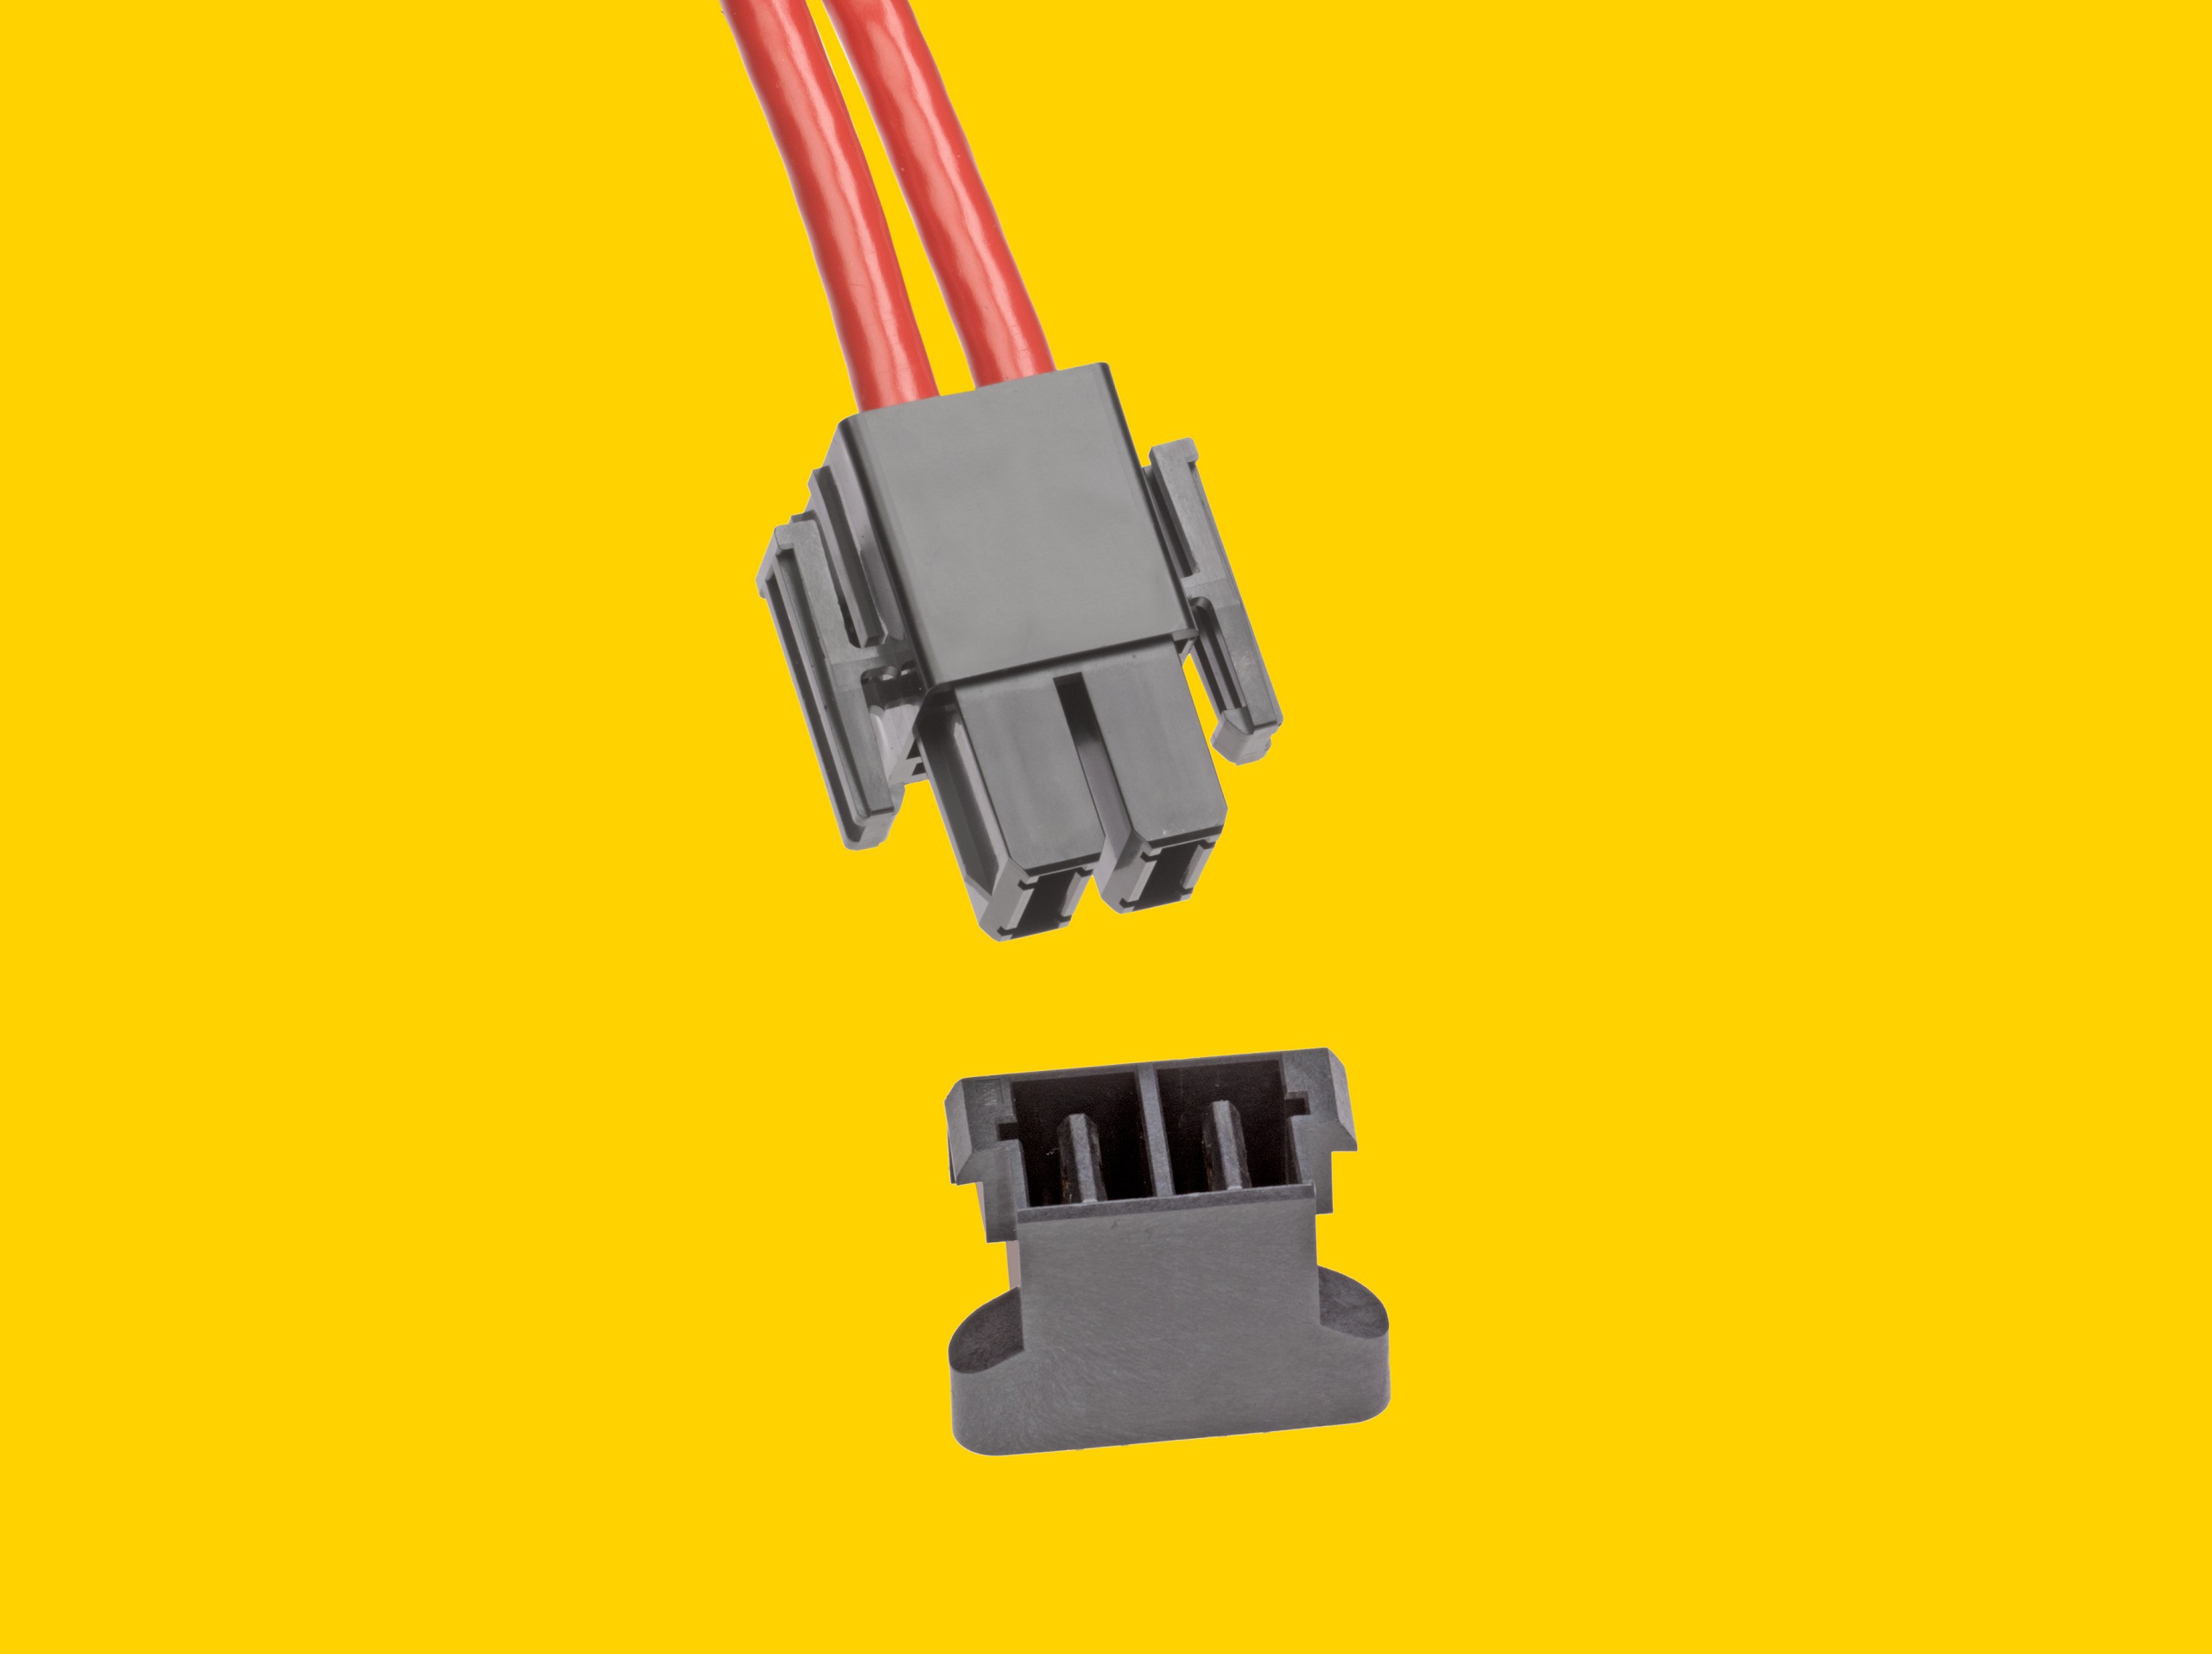 Molex 的 EXTreme Guardian™ 电源连接器系统现提供二至六电路线束组件版本